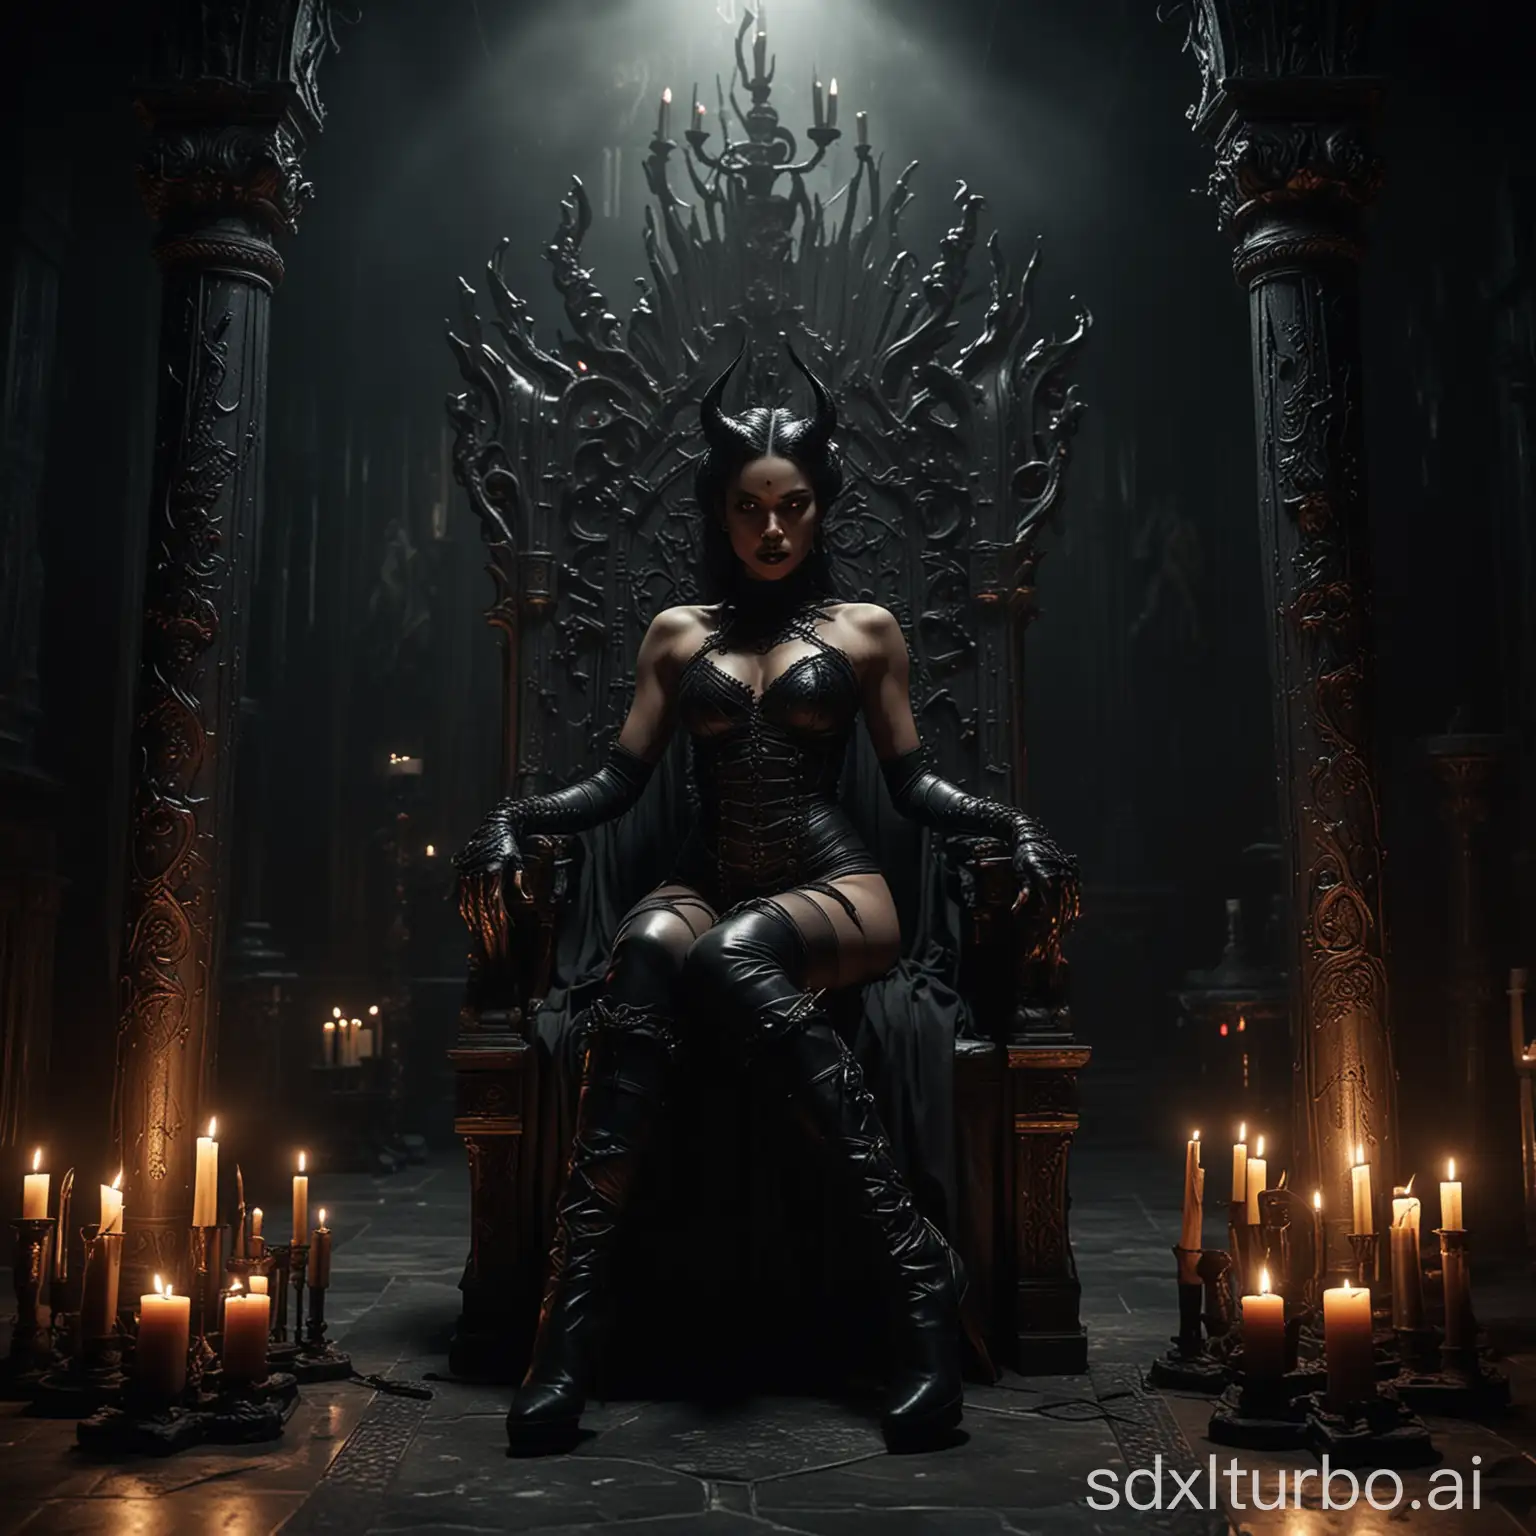 Seductive-Black-Demon-Woman-on-Throne-in-Eerie-Chamber